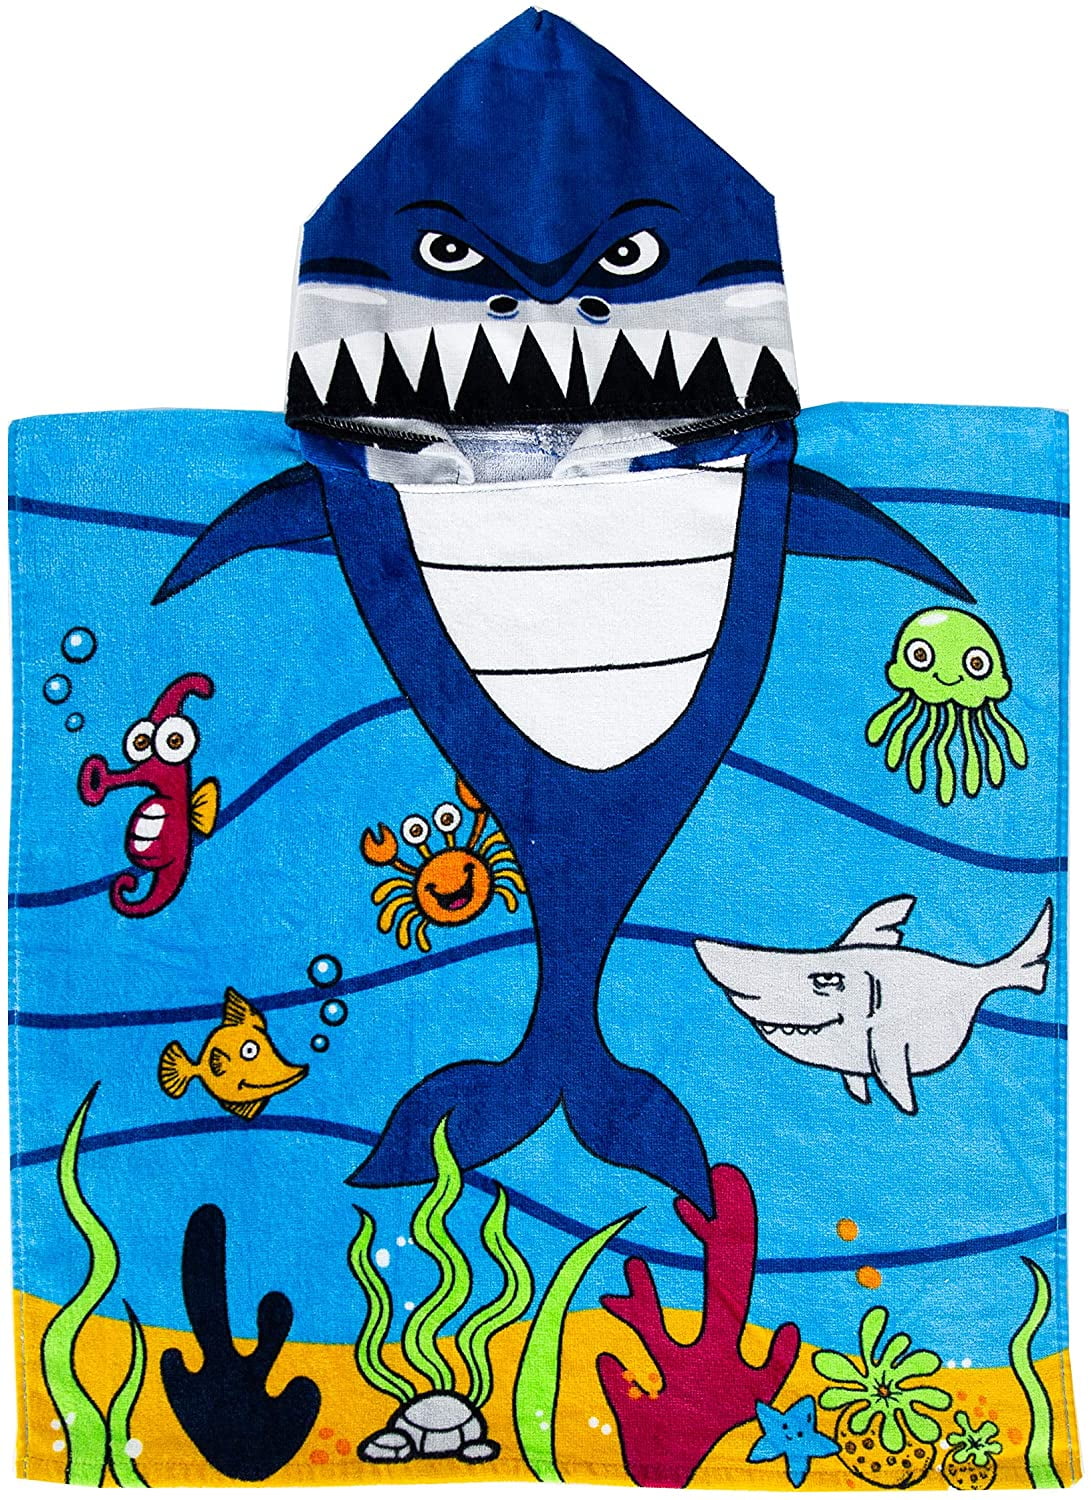 Giant Shark Whale Round Beach Towel Elastic with Fringe Circular Yoga Mat Blanket for Women Girls Kids 59 Inches 